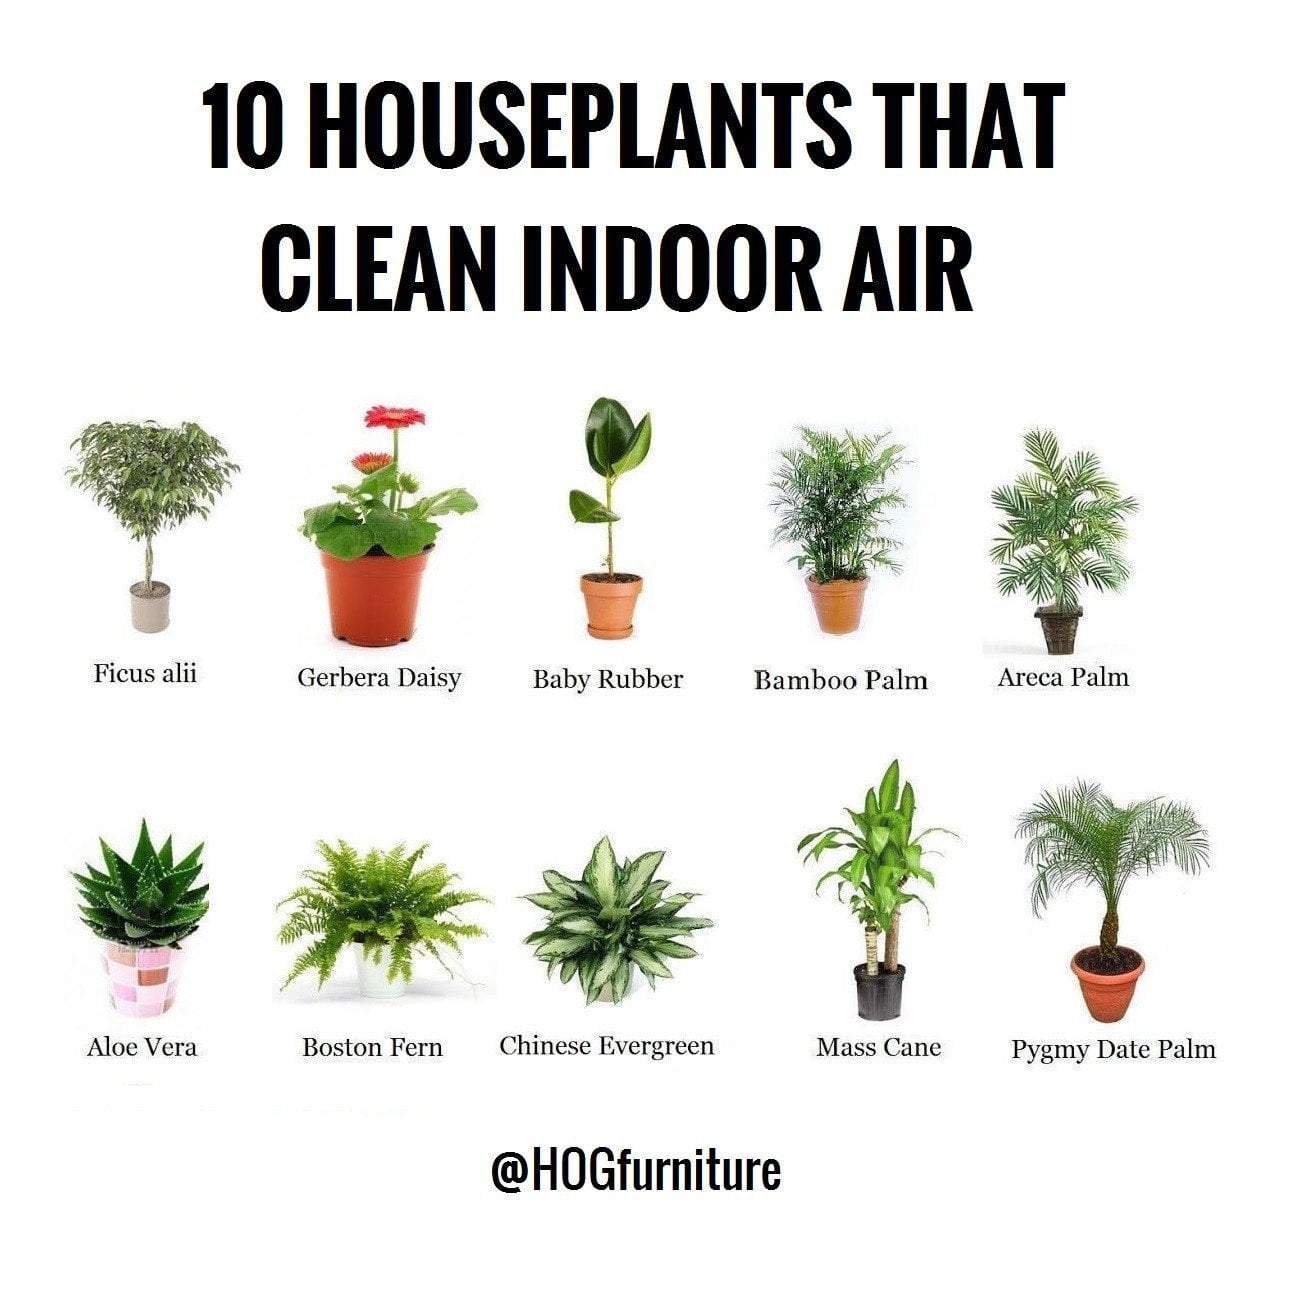 HOG on 10 house plants that clean indoor air